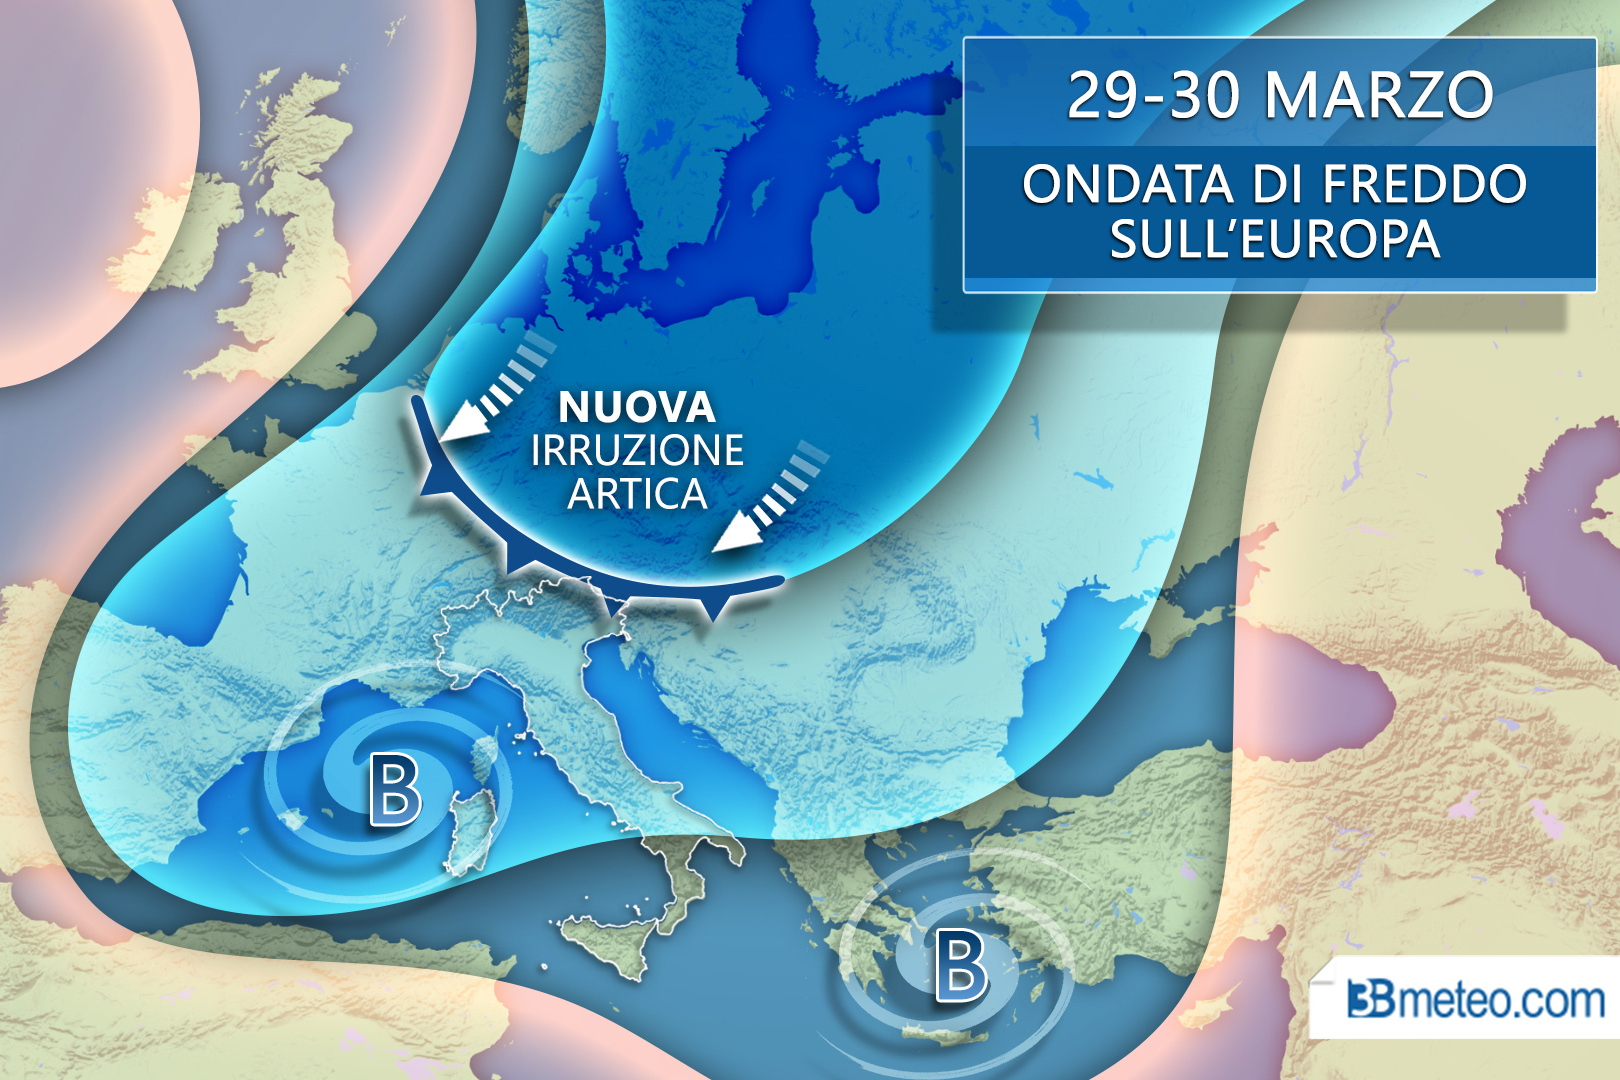 29-30 marzo meteo italia freddo europea